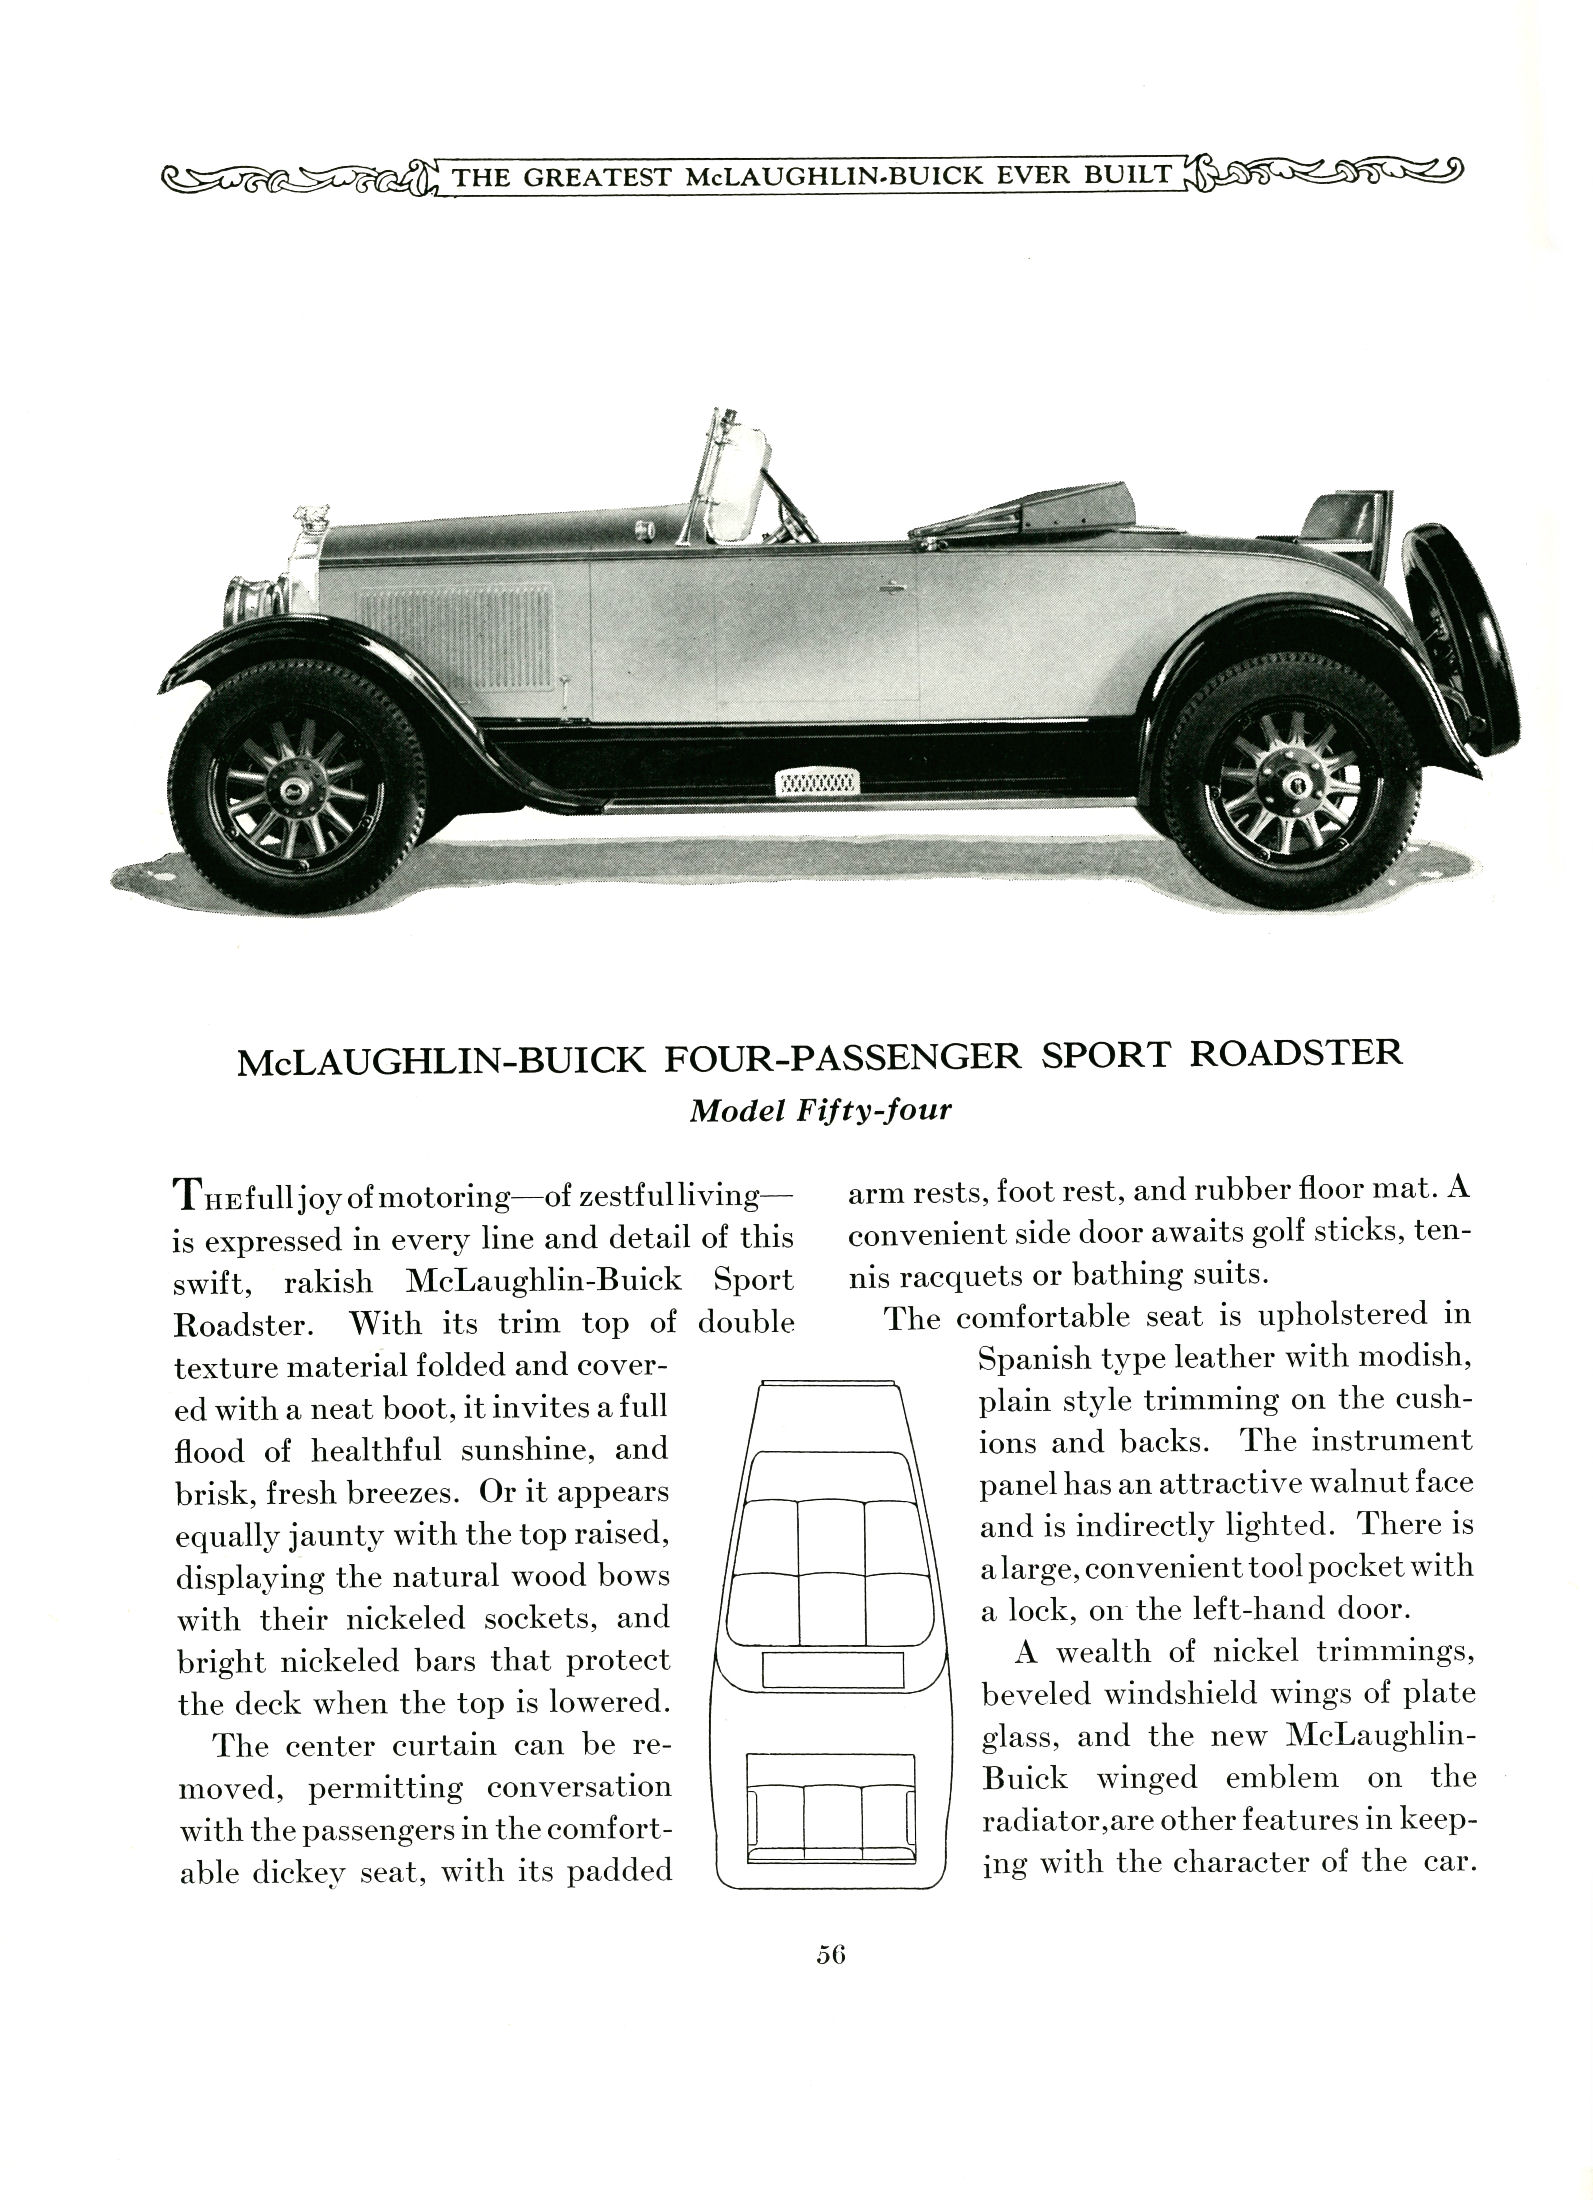 1930 McLaughlin Buick Booklet-56